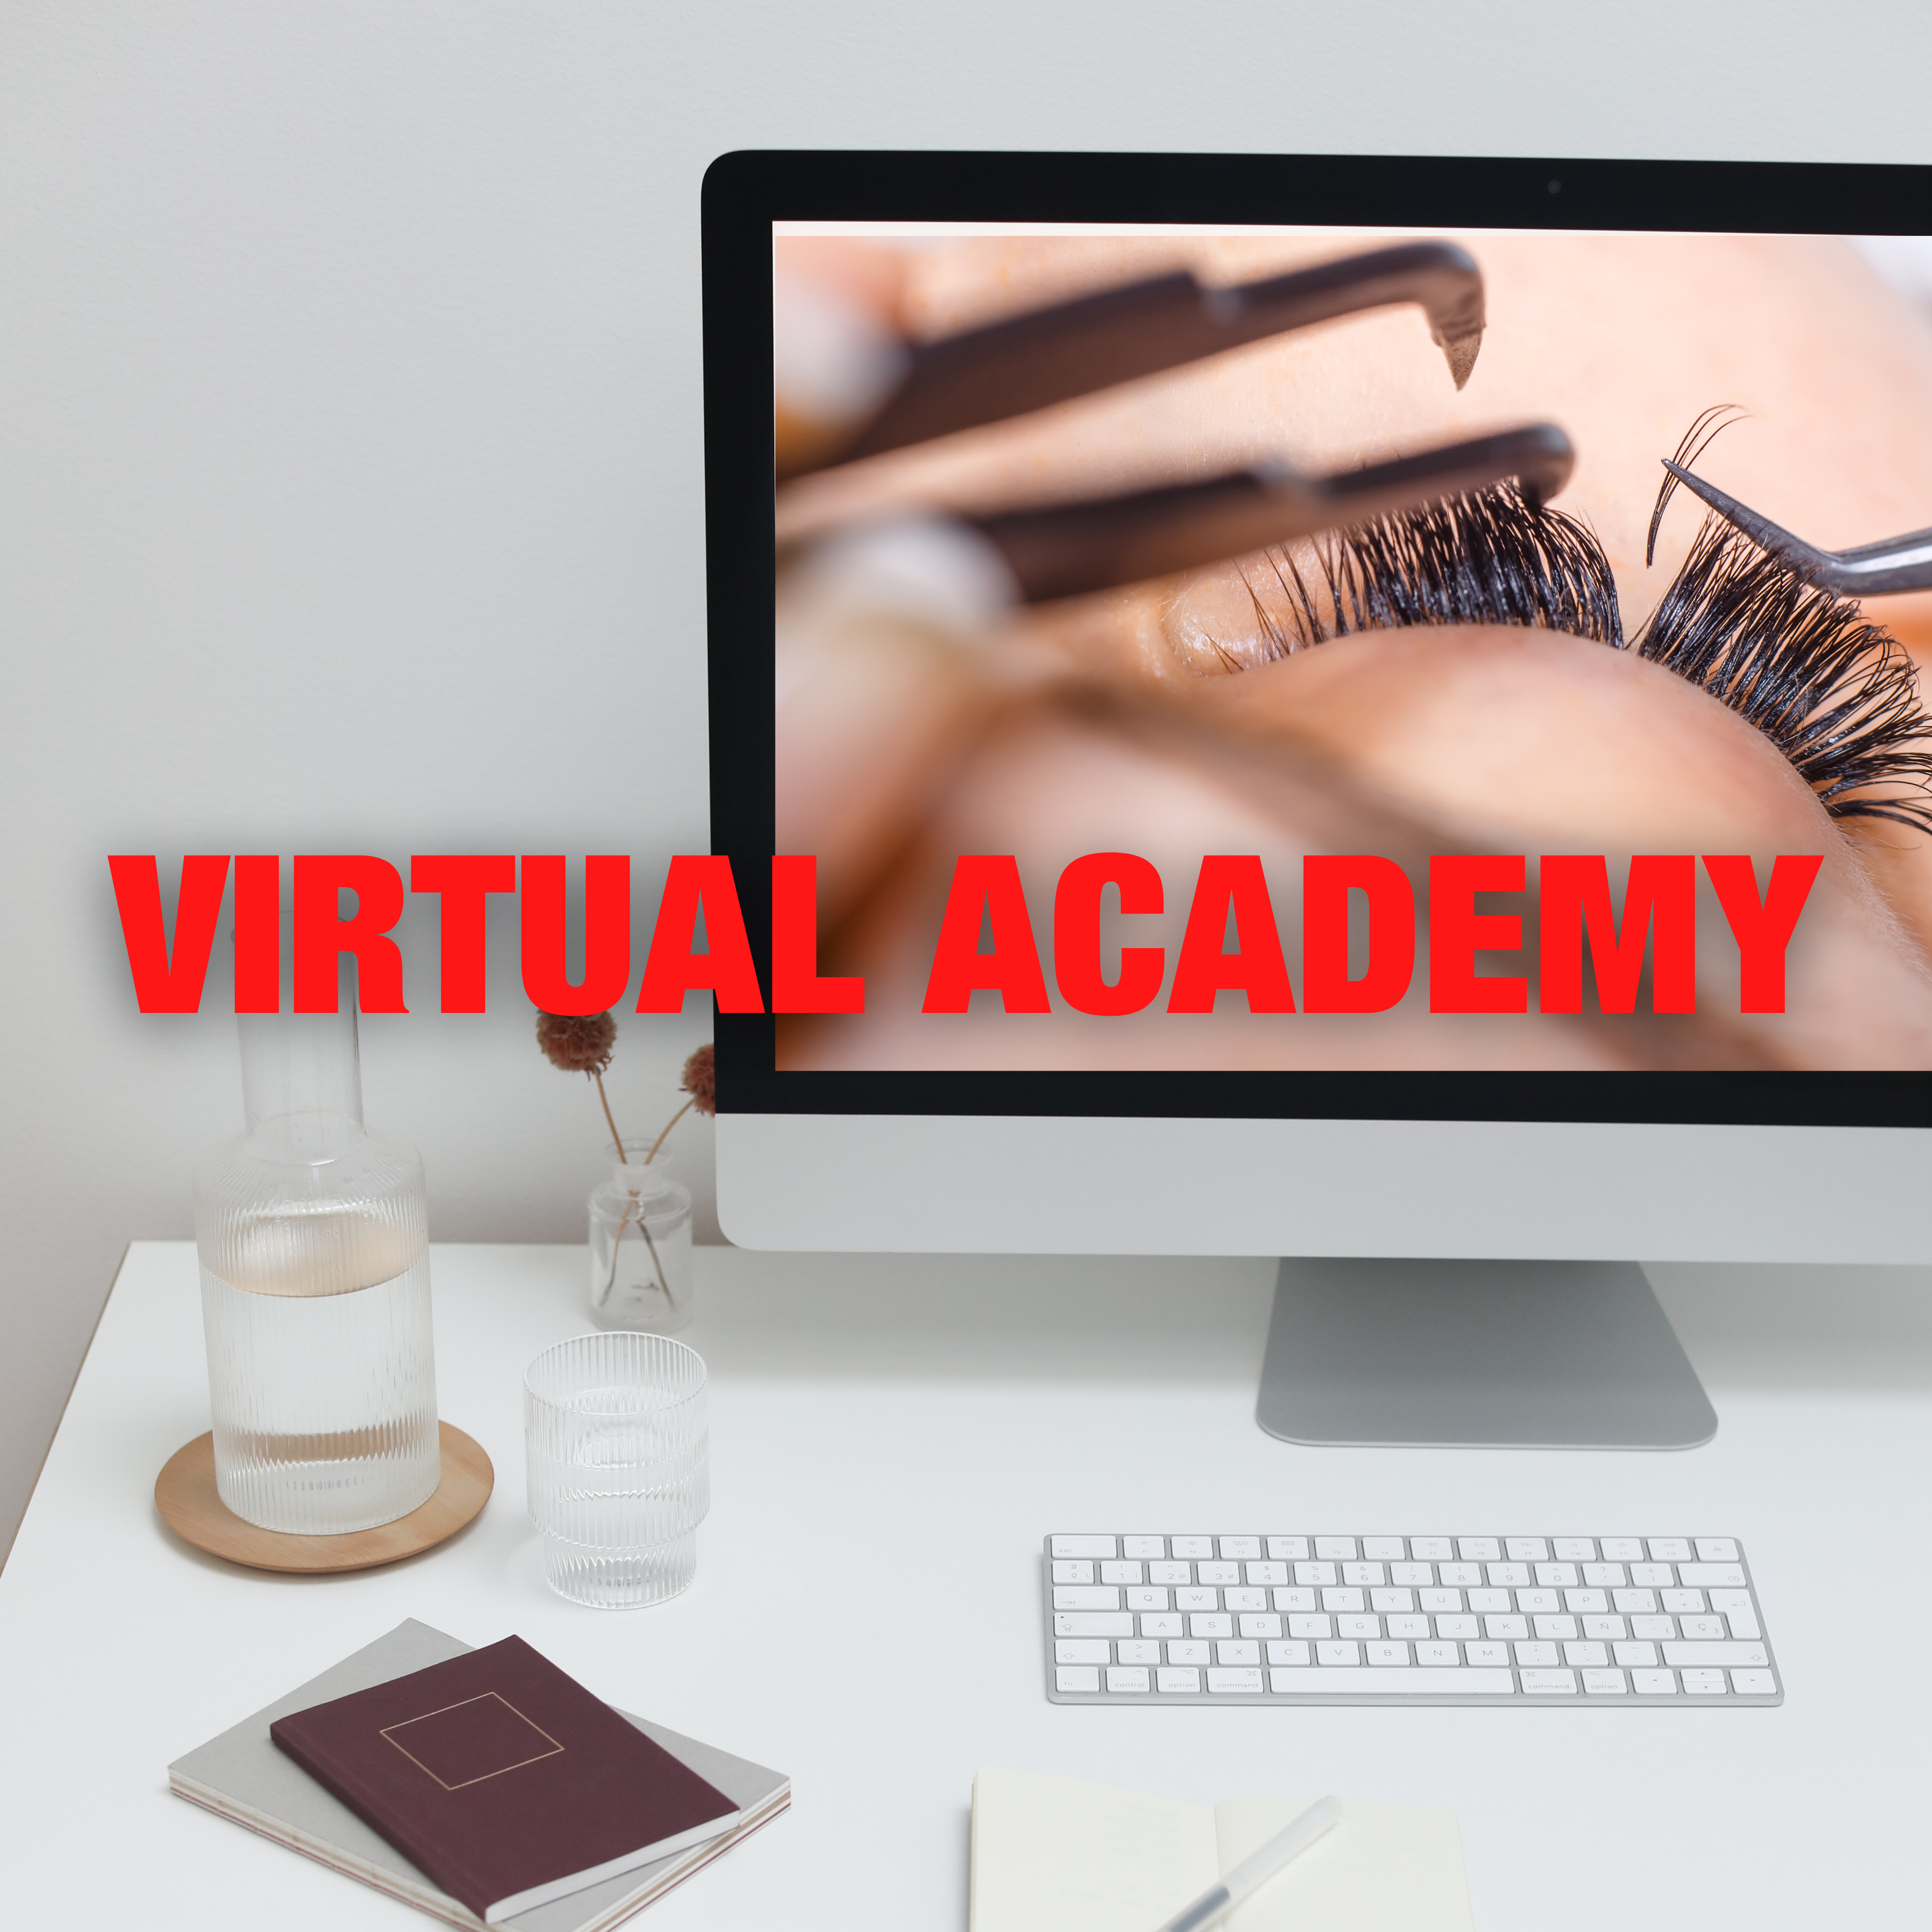 Virtual Academy